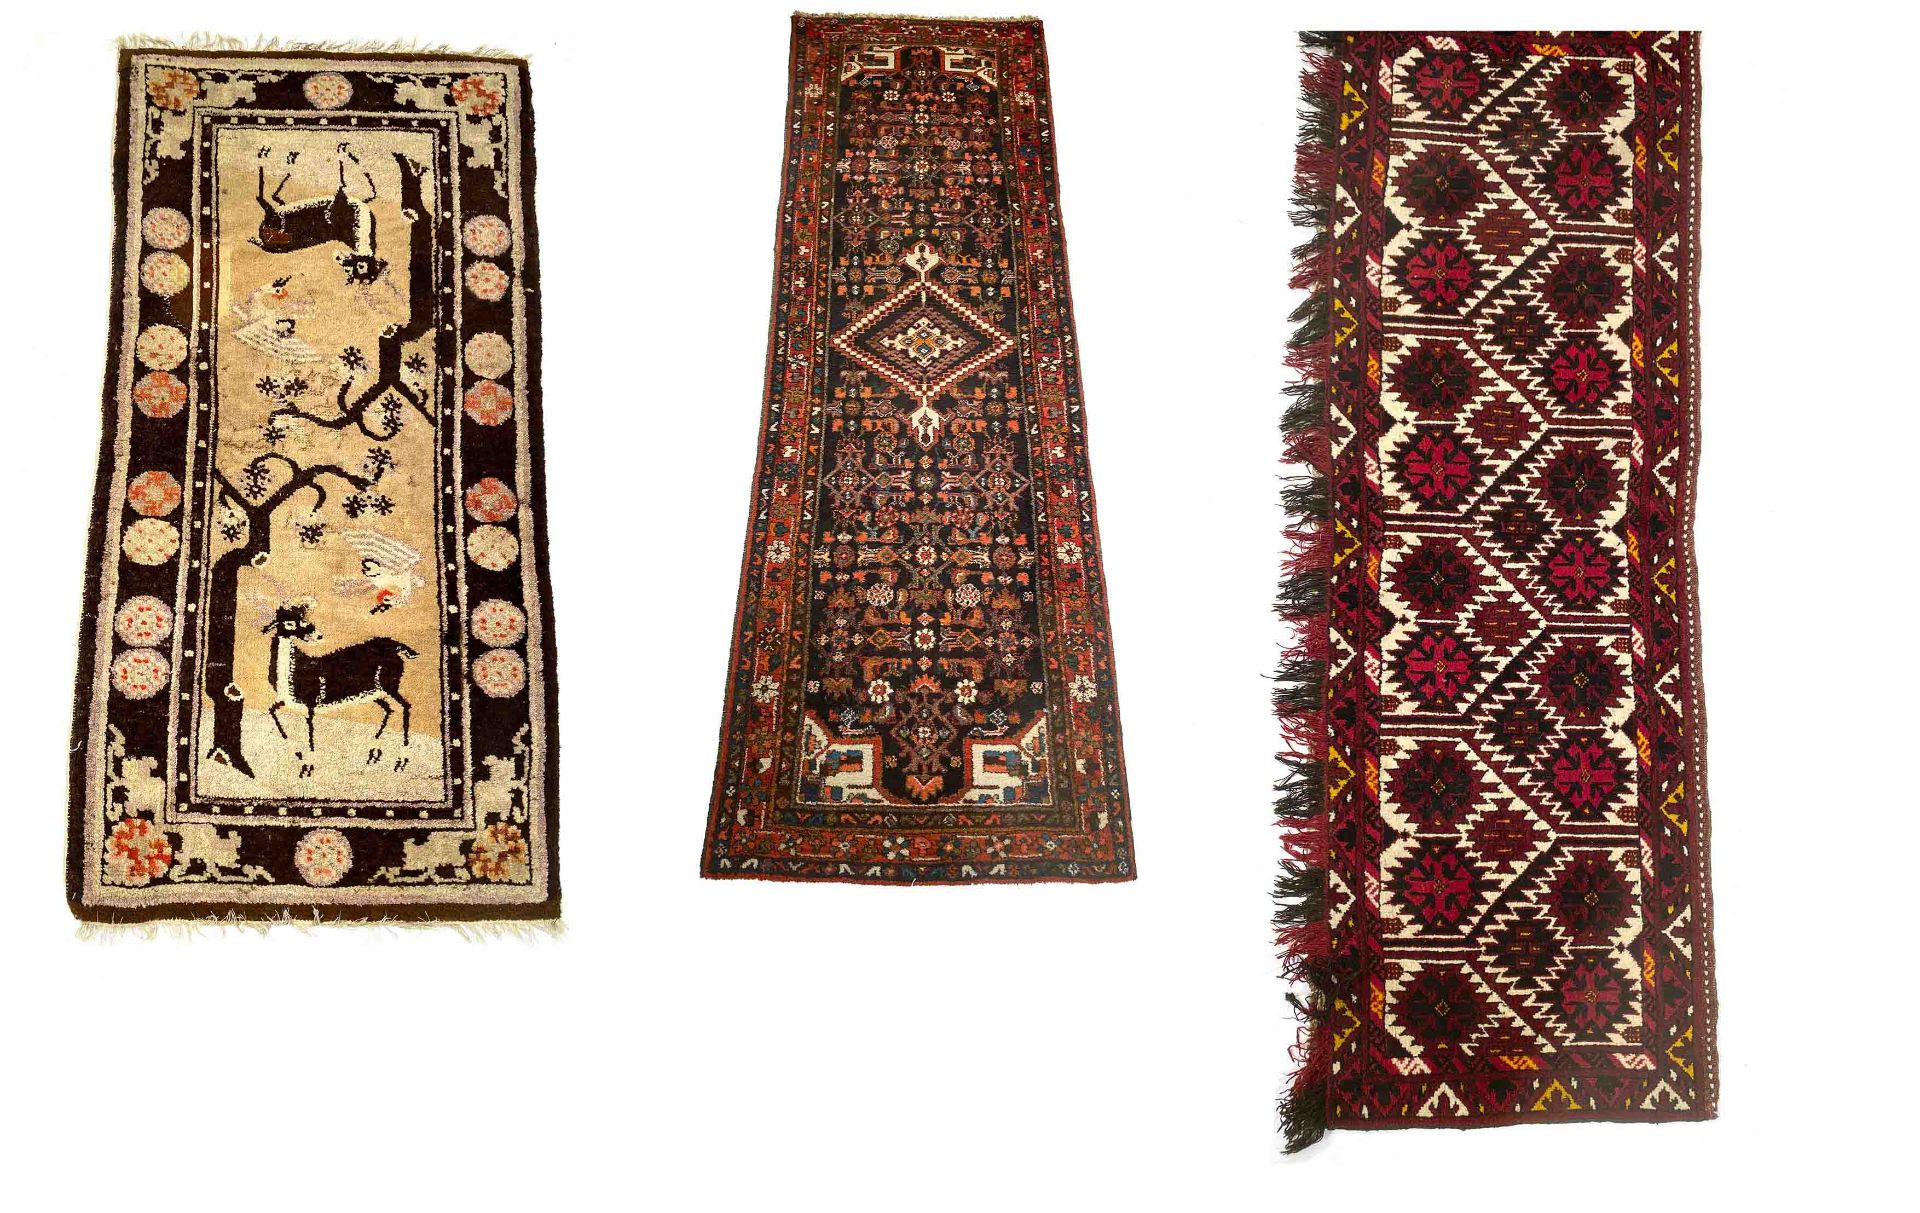 3 carpets: 1 x Turkmen Torba, good condition, 154 x 48 cm. 1 x China, heavily worn, 126 x 64 cm. 1 x